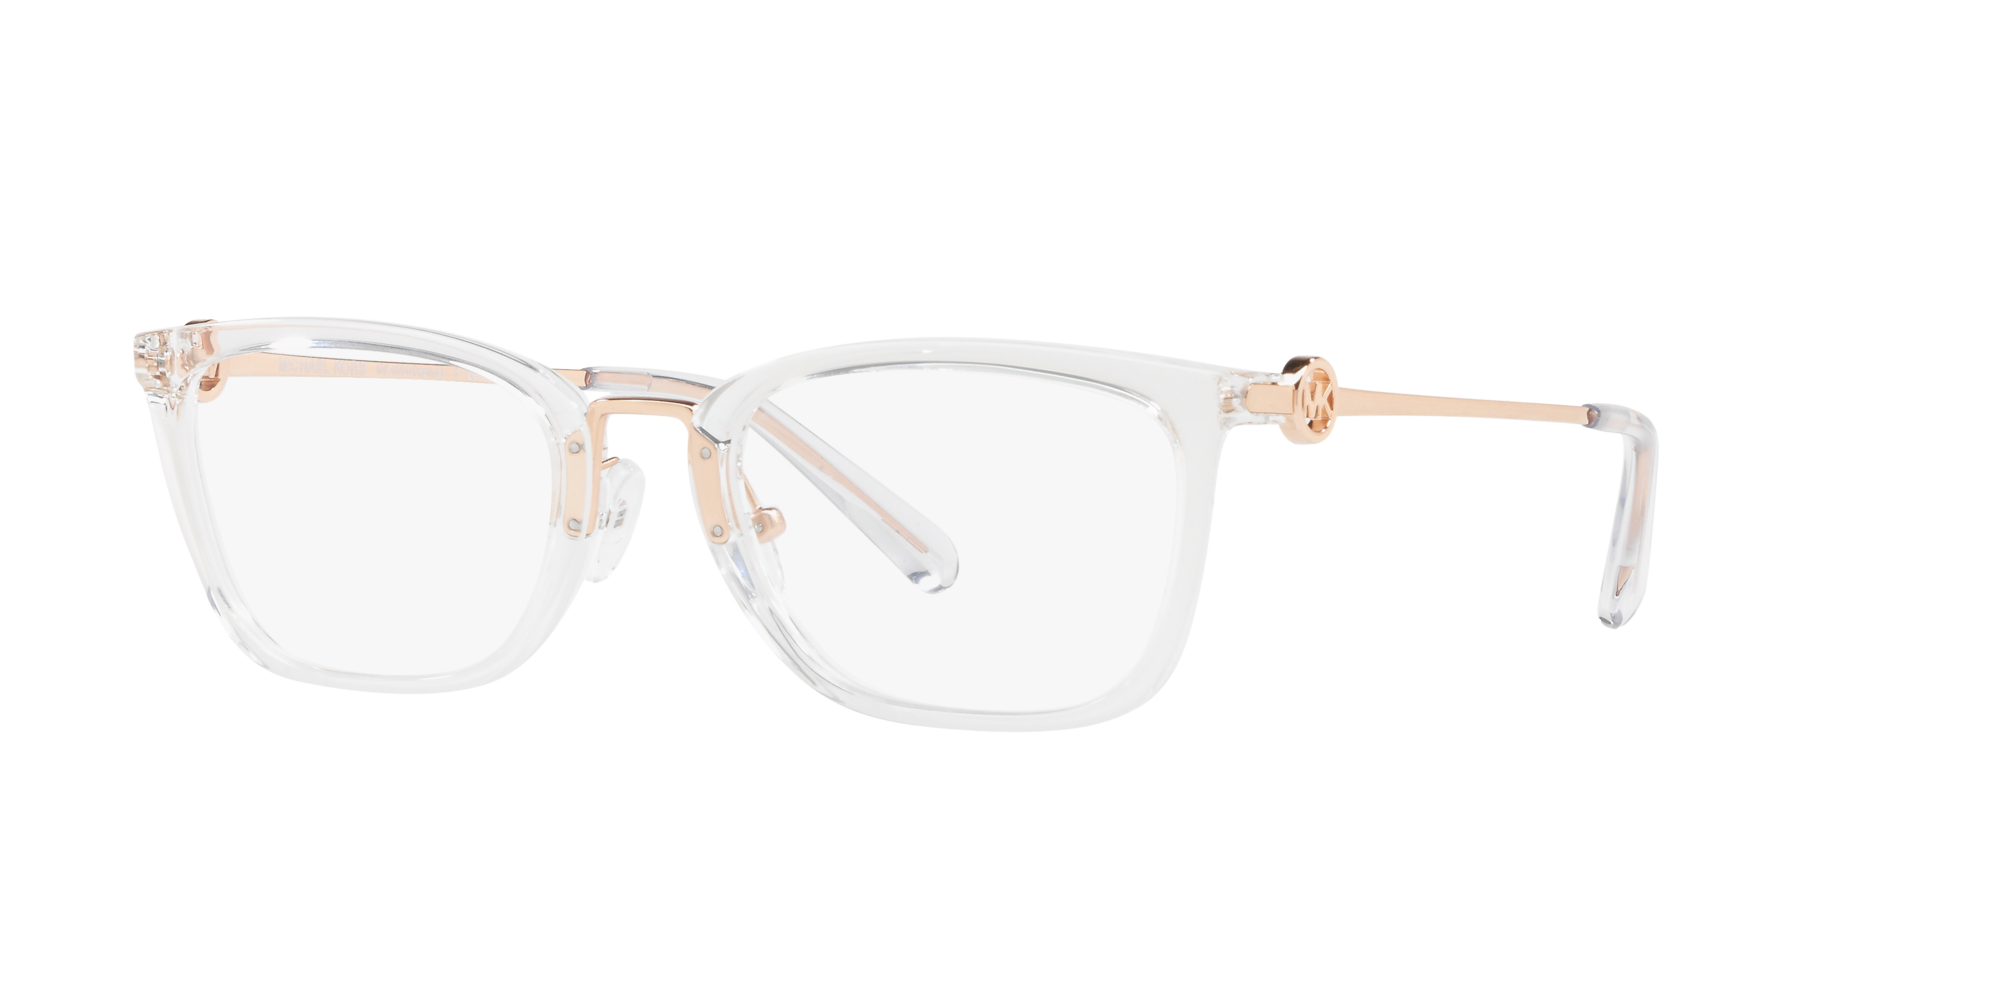 New MICHAEL KORS Eyeglasses Coconut Grove MK 3032 3417 Pink Clear amp  Gold Frames  eBay